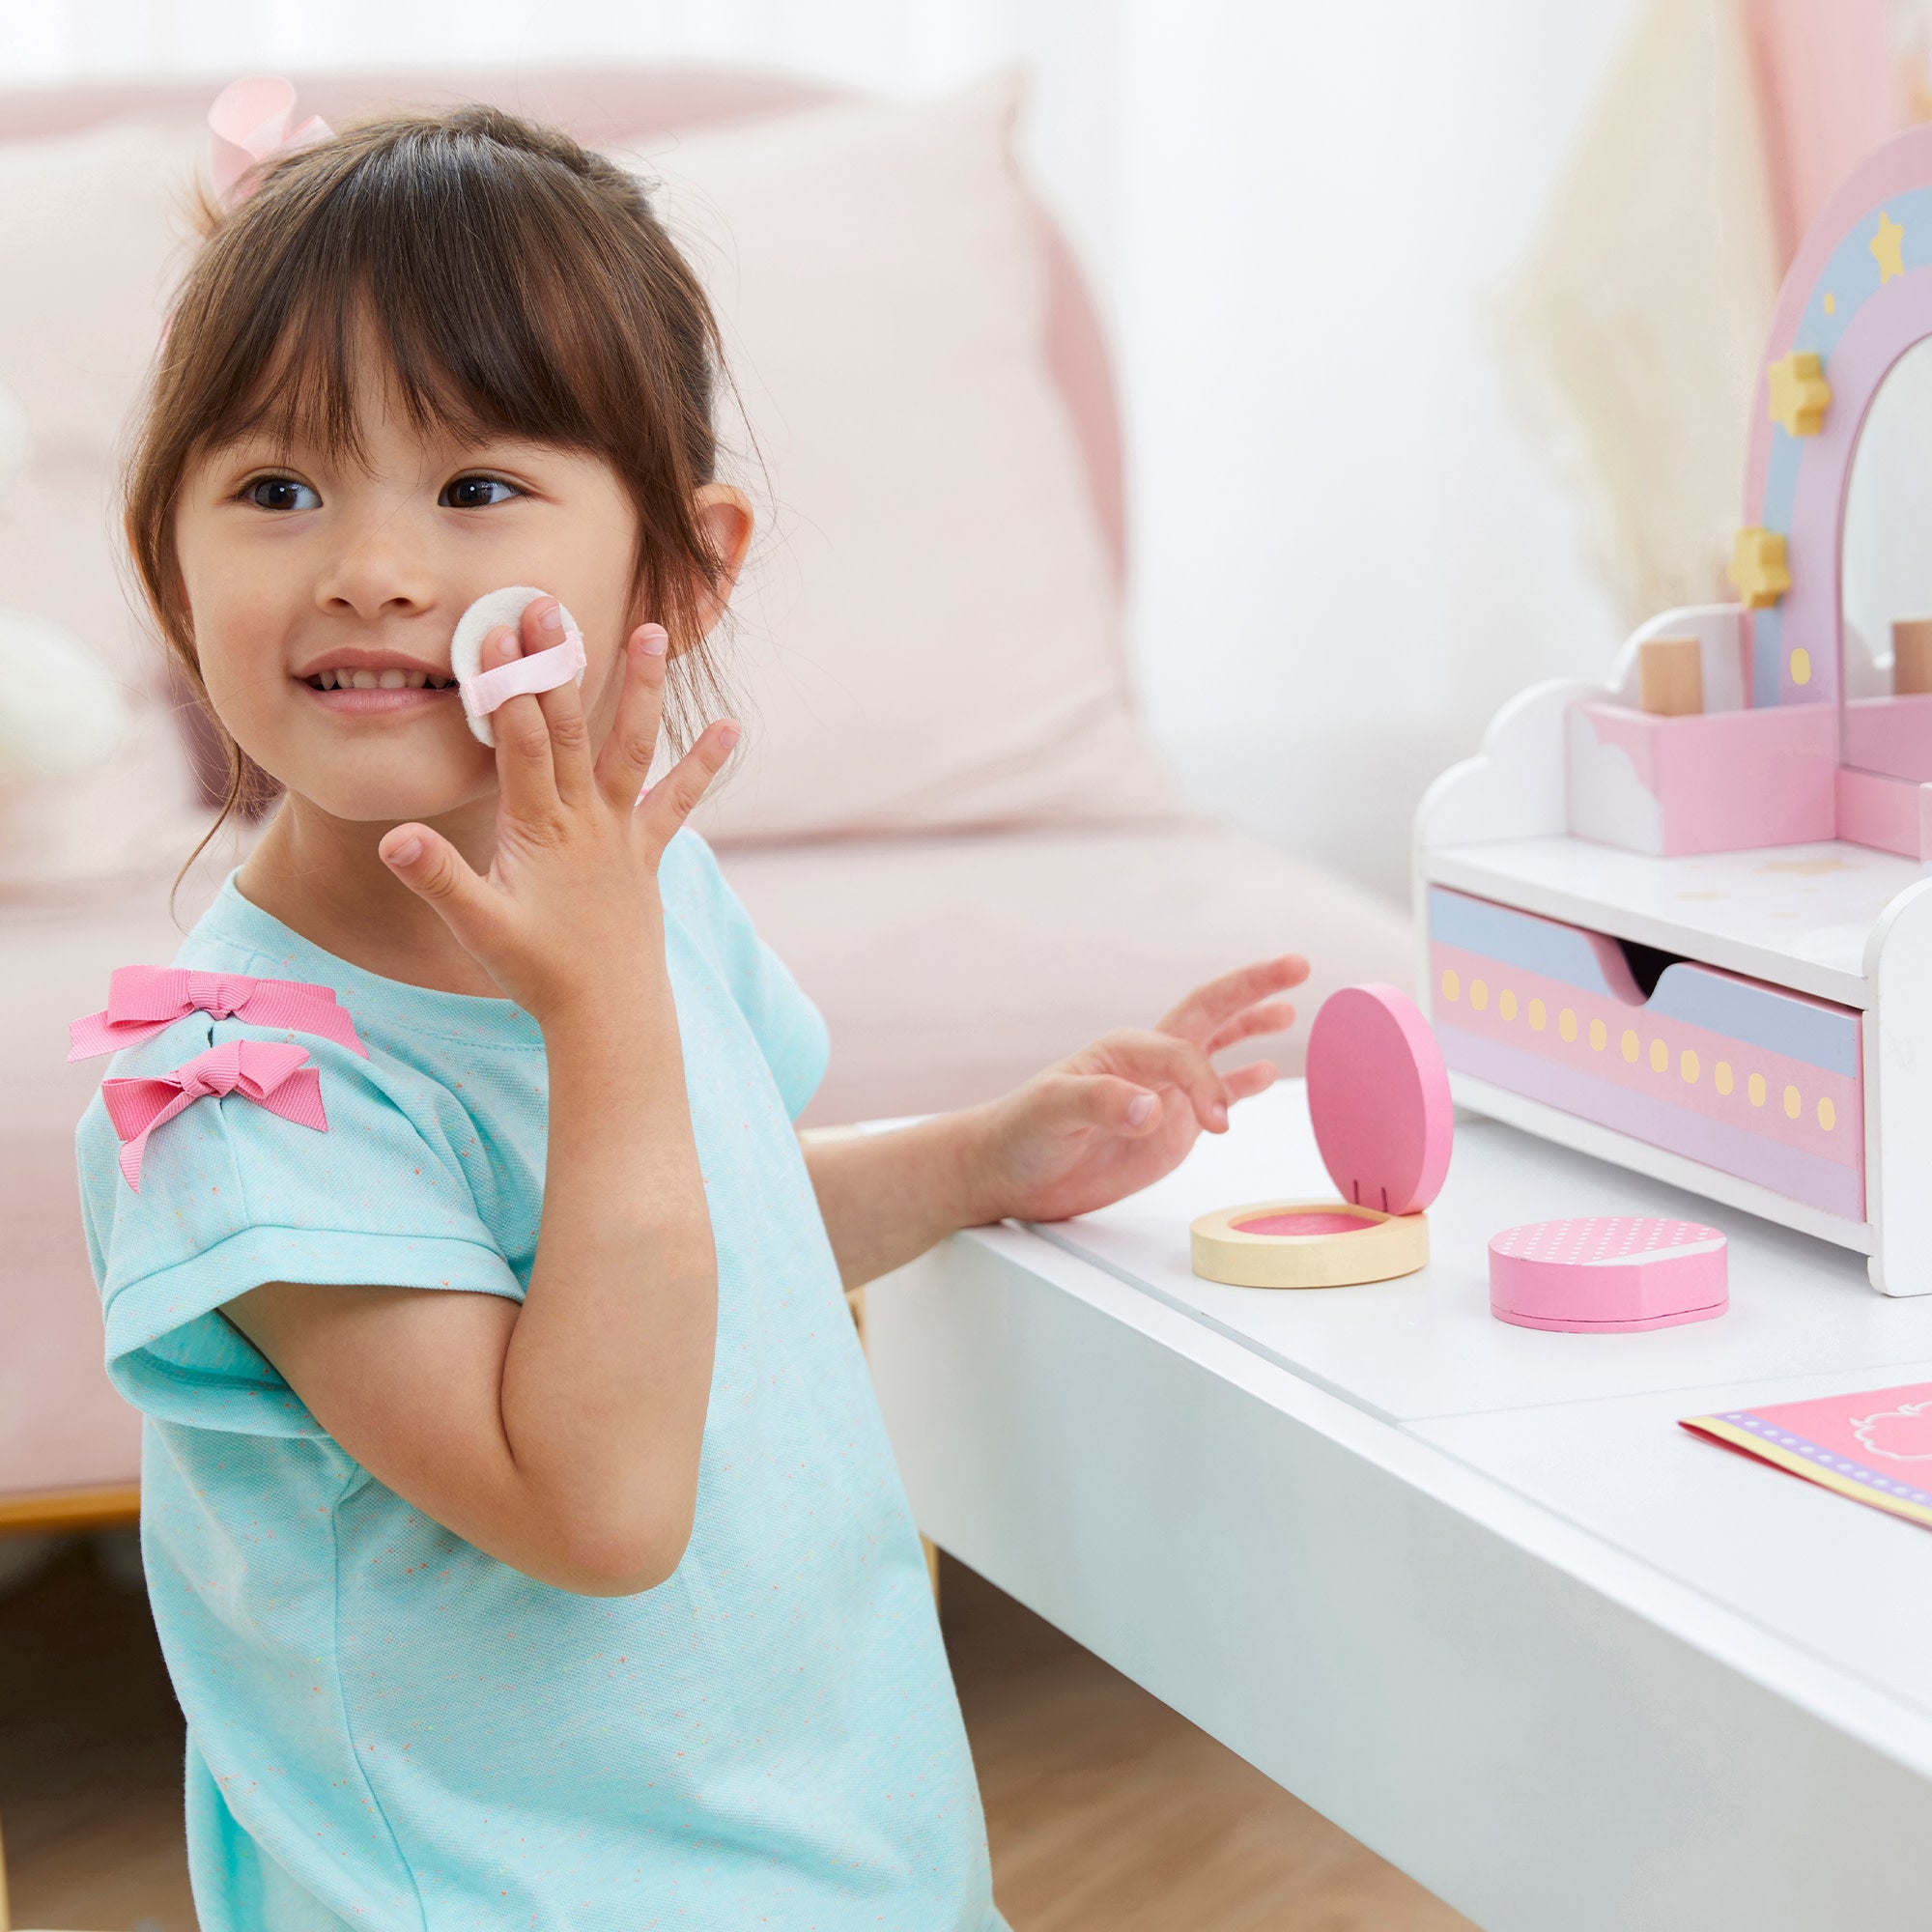 Teamson Kids Little Dreamer Wooden Tabletop Vanity Set with 9 Play Accessories, Pink